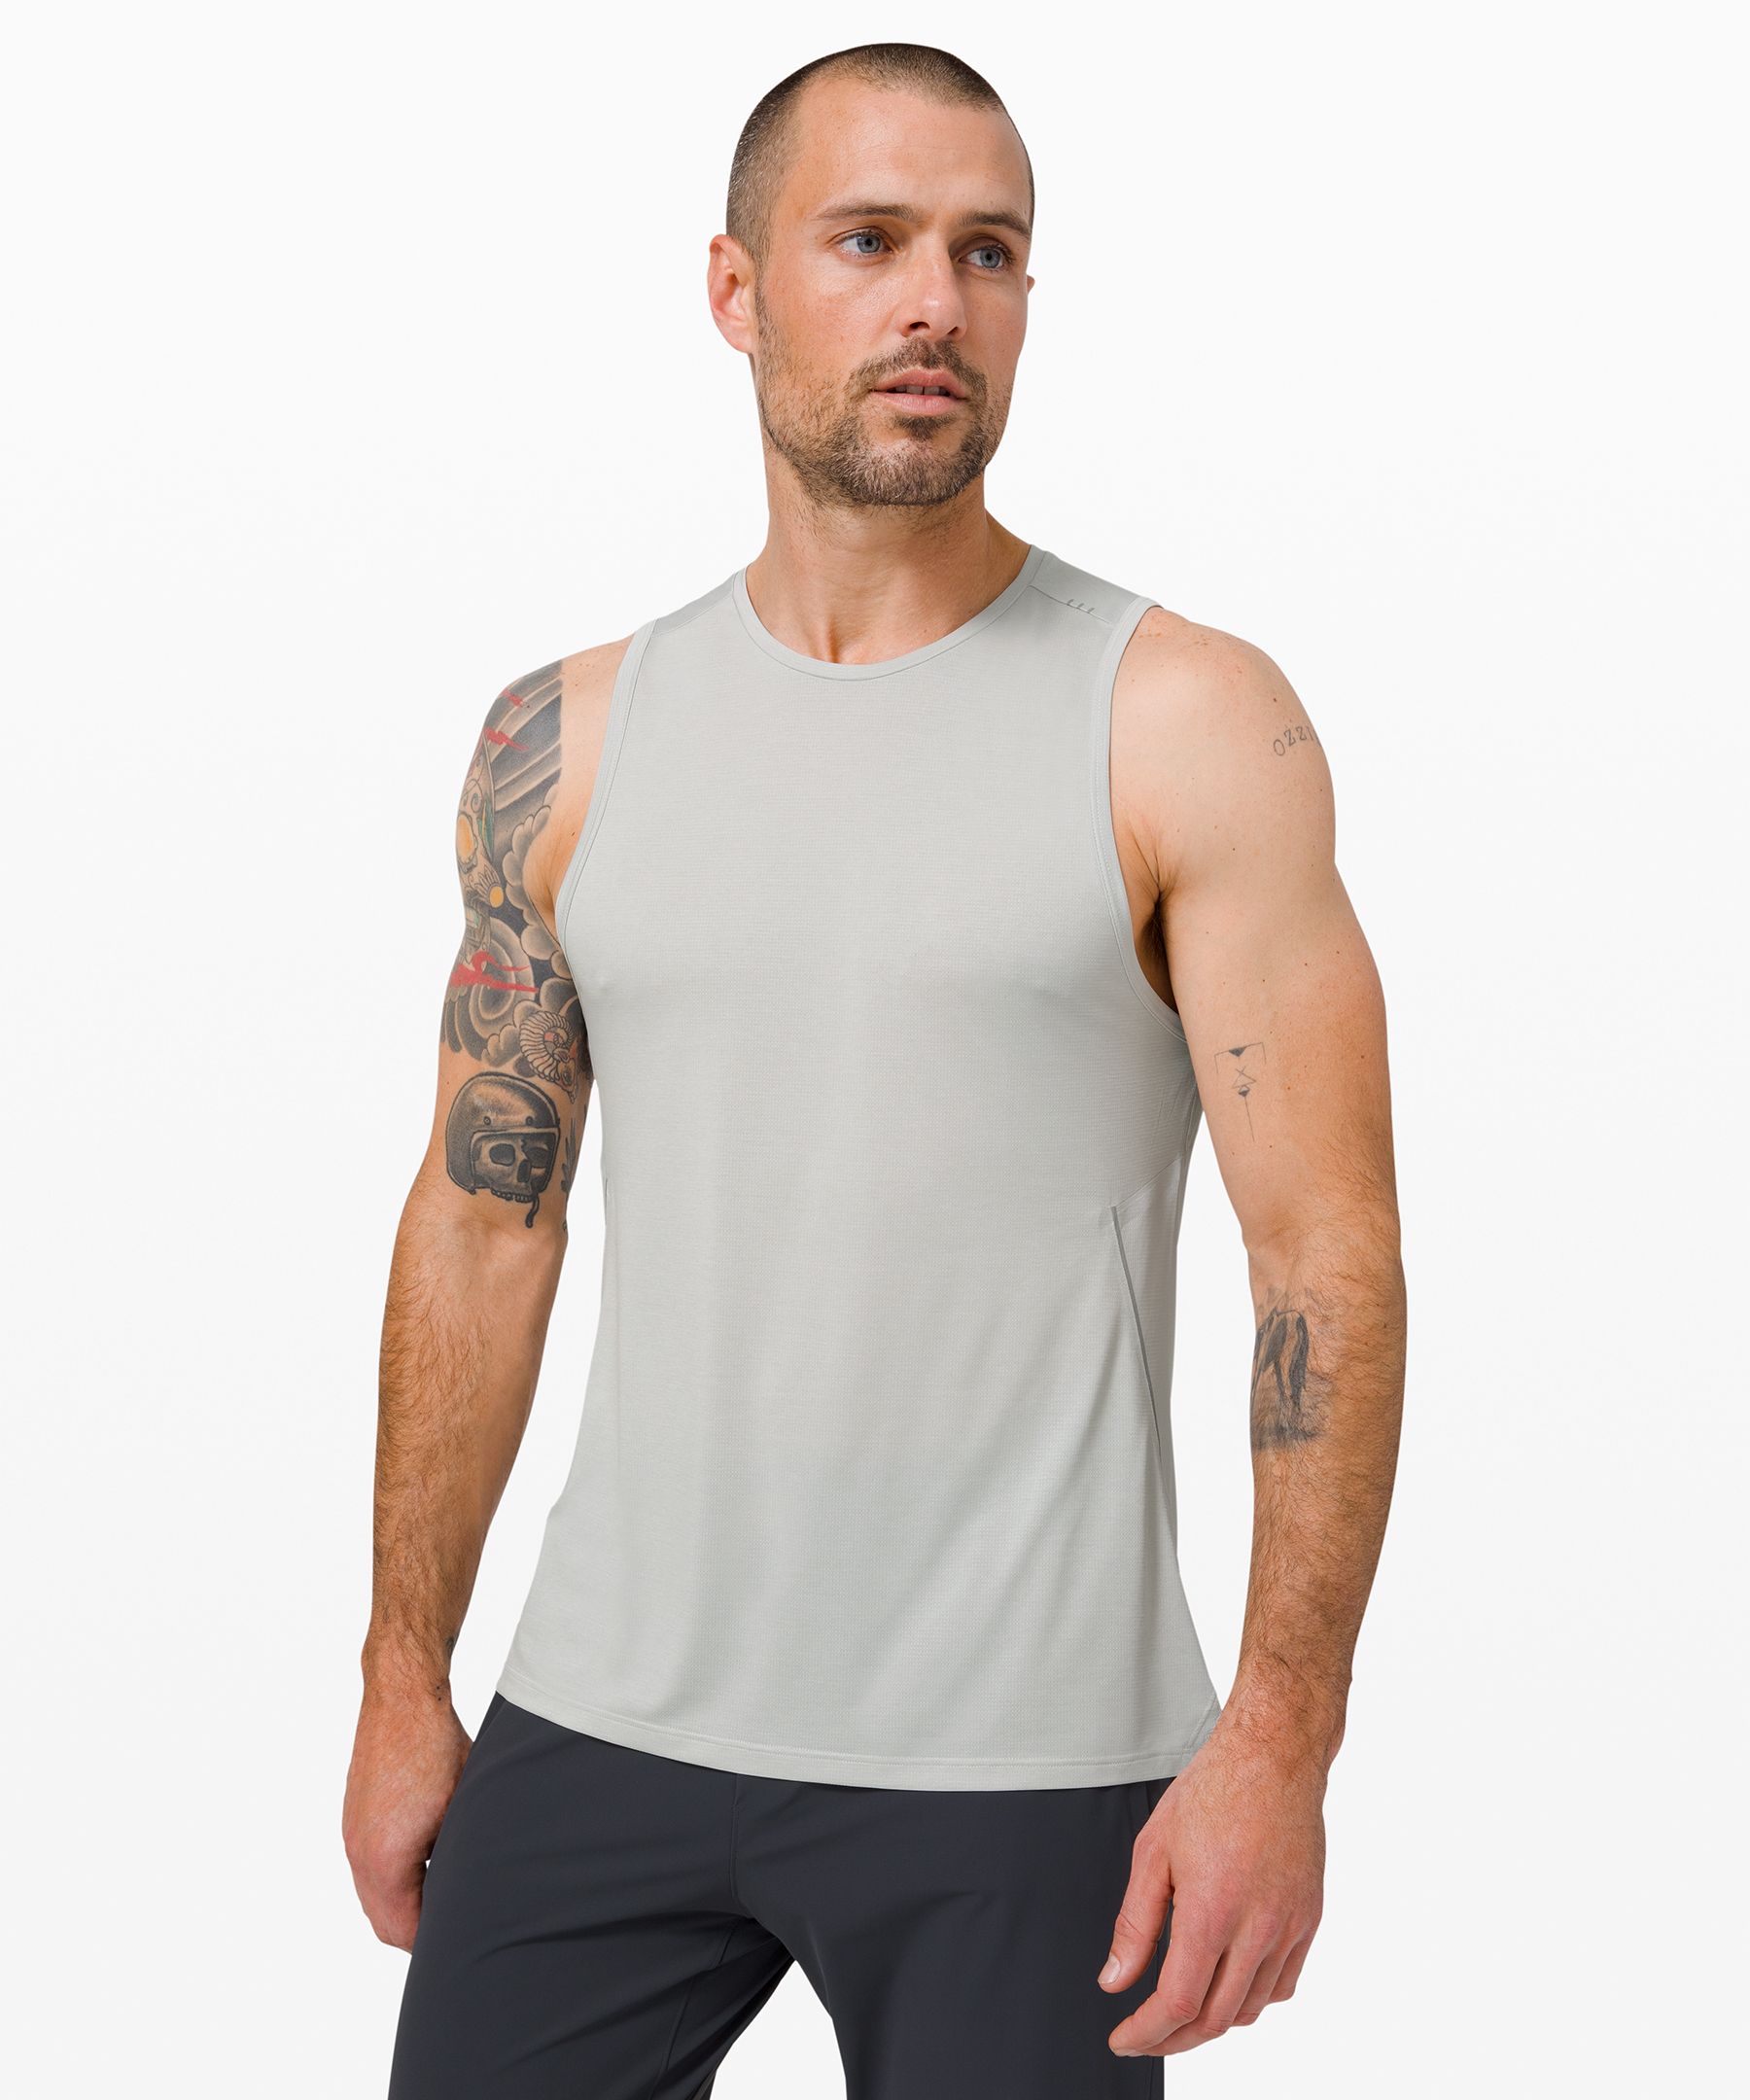 lululemon mens sleeveless shirt